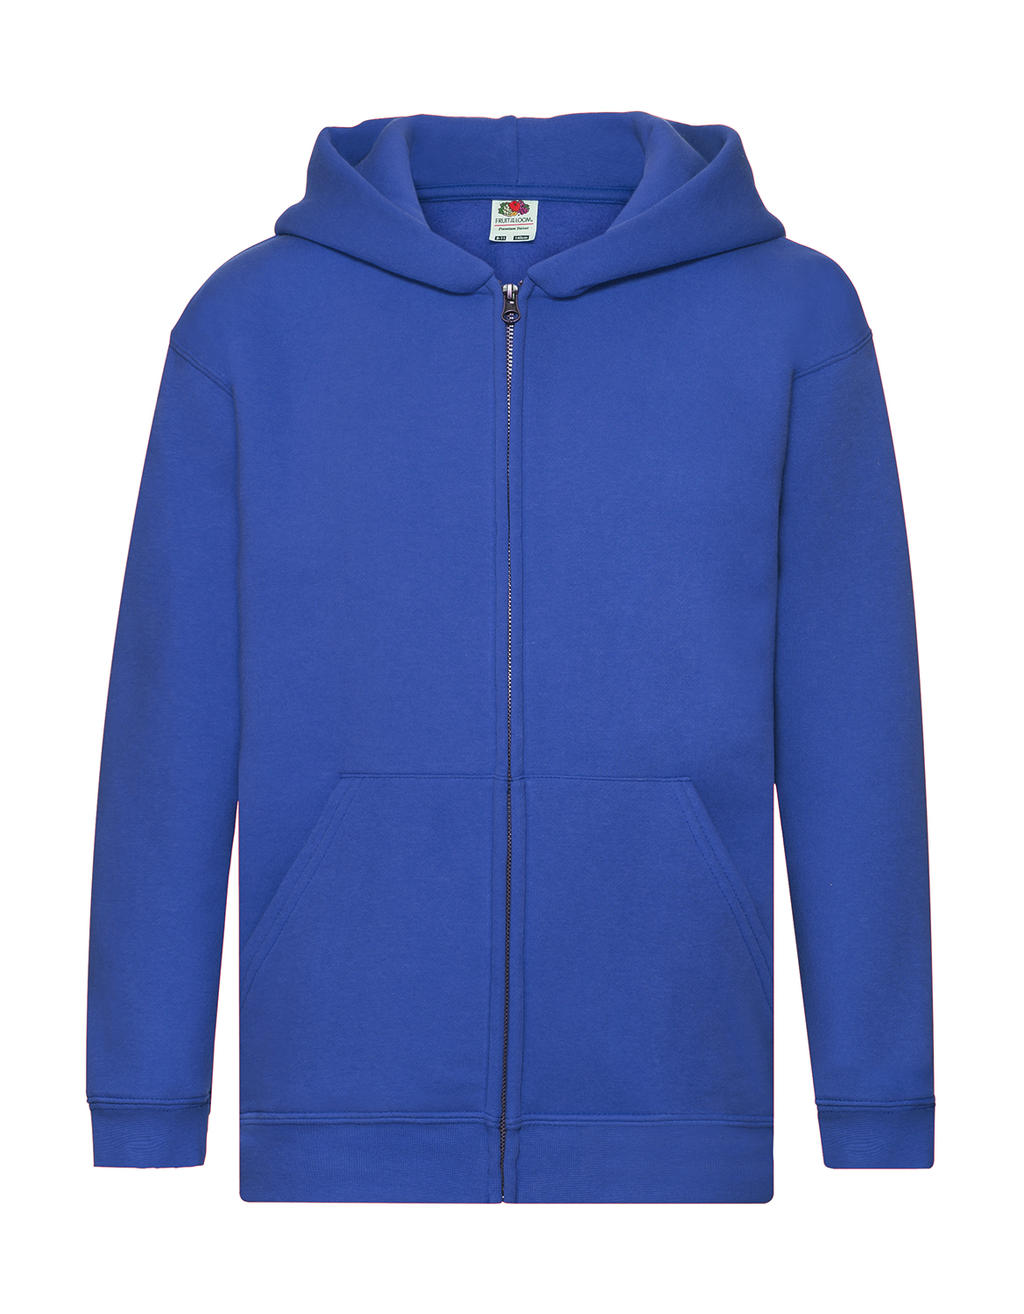  Kids Premium Hooded Sweat Jacket in Farbe Royal